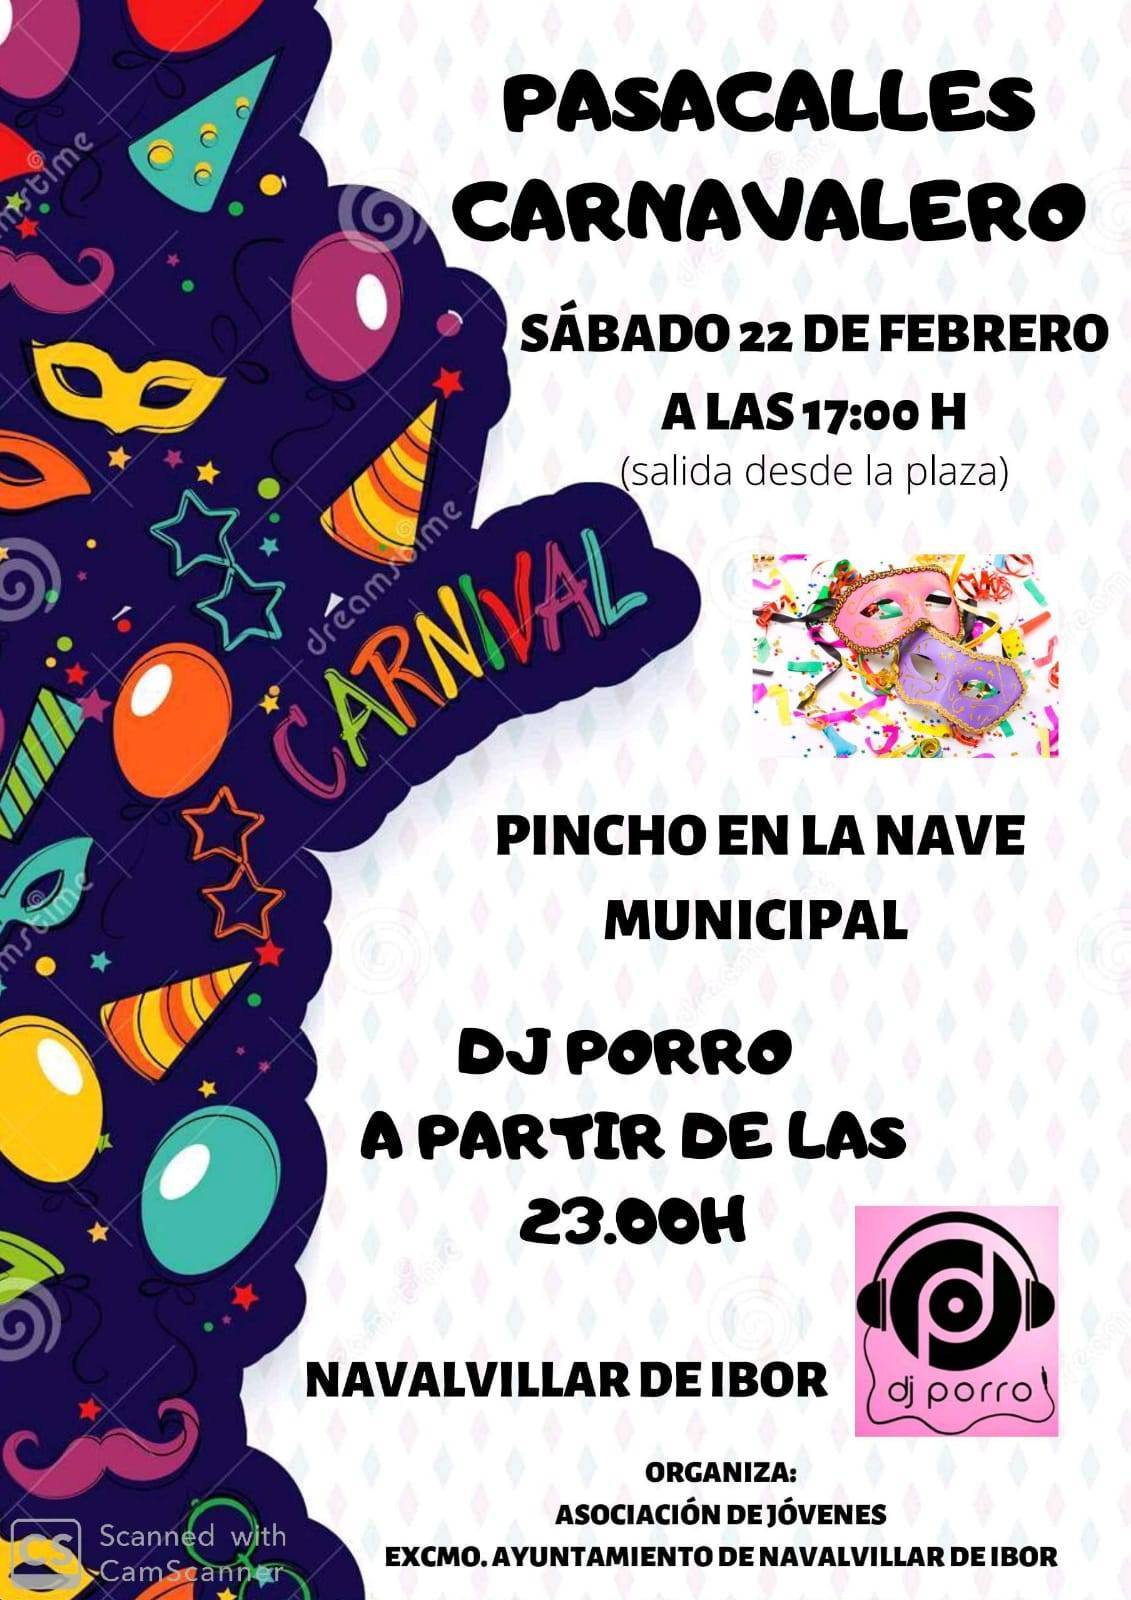 Pasacalles carnavalero 2020 - Navalvillar de Ibor (Cáceres)